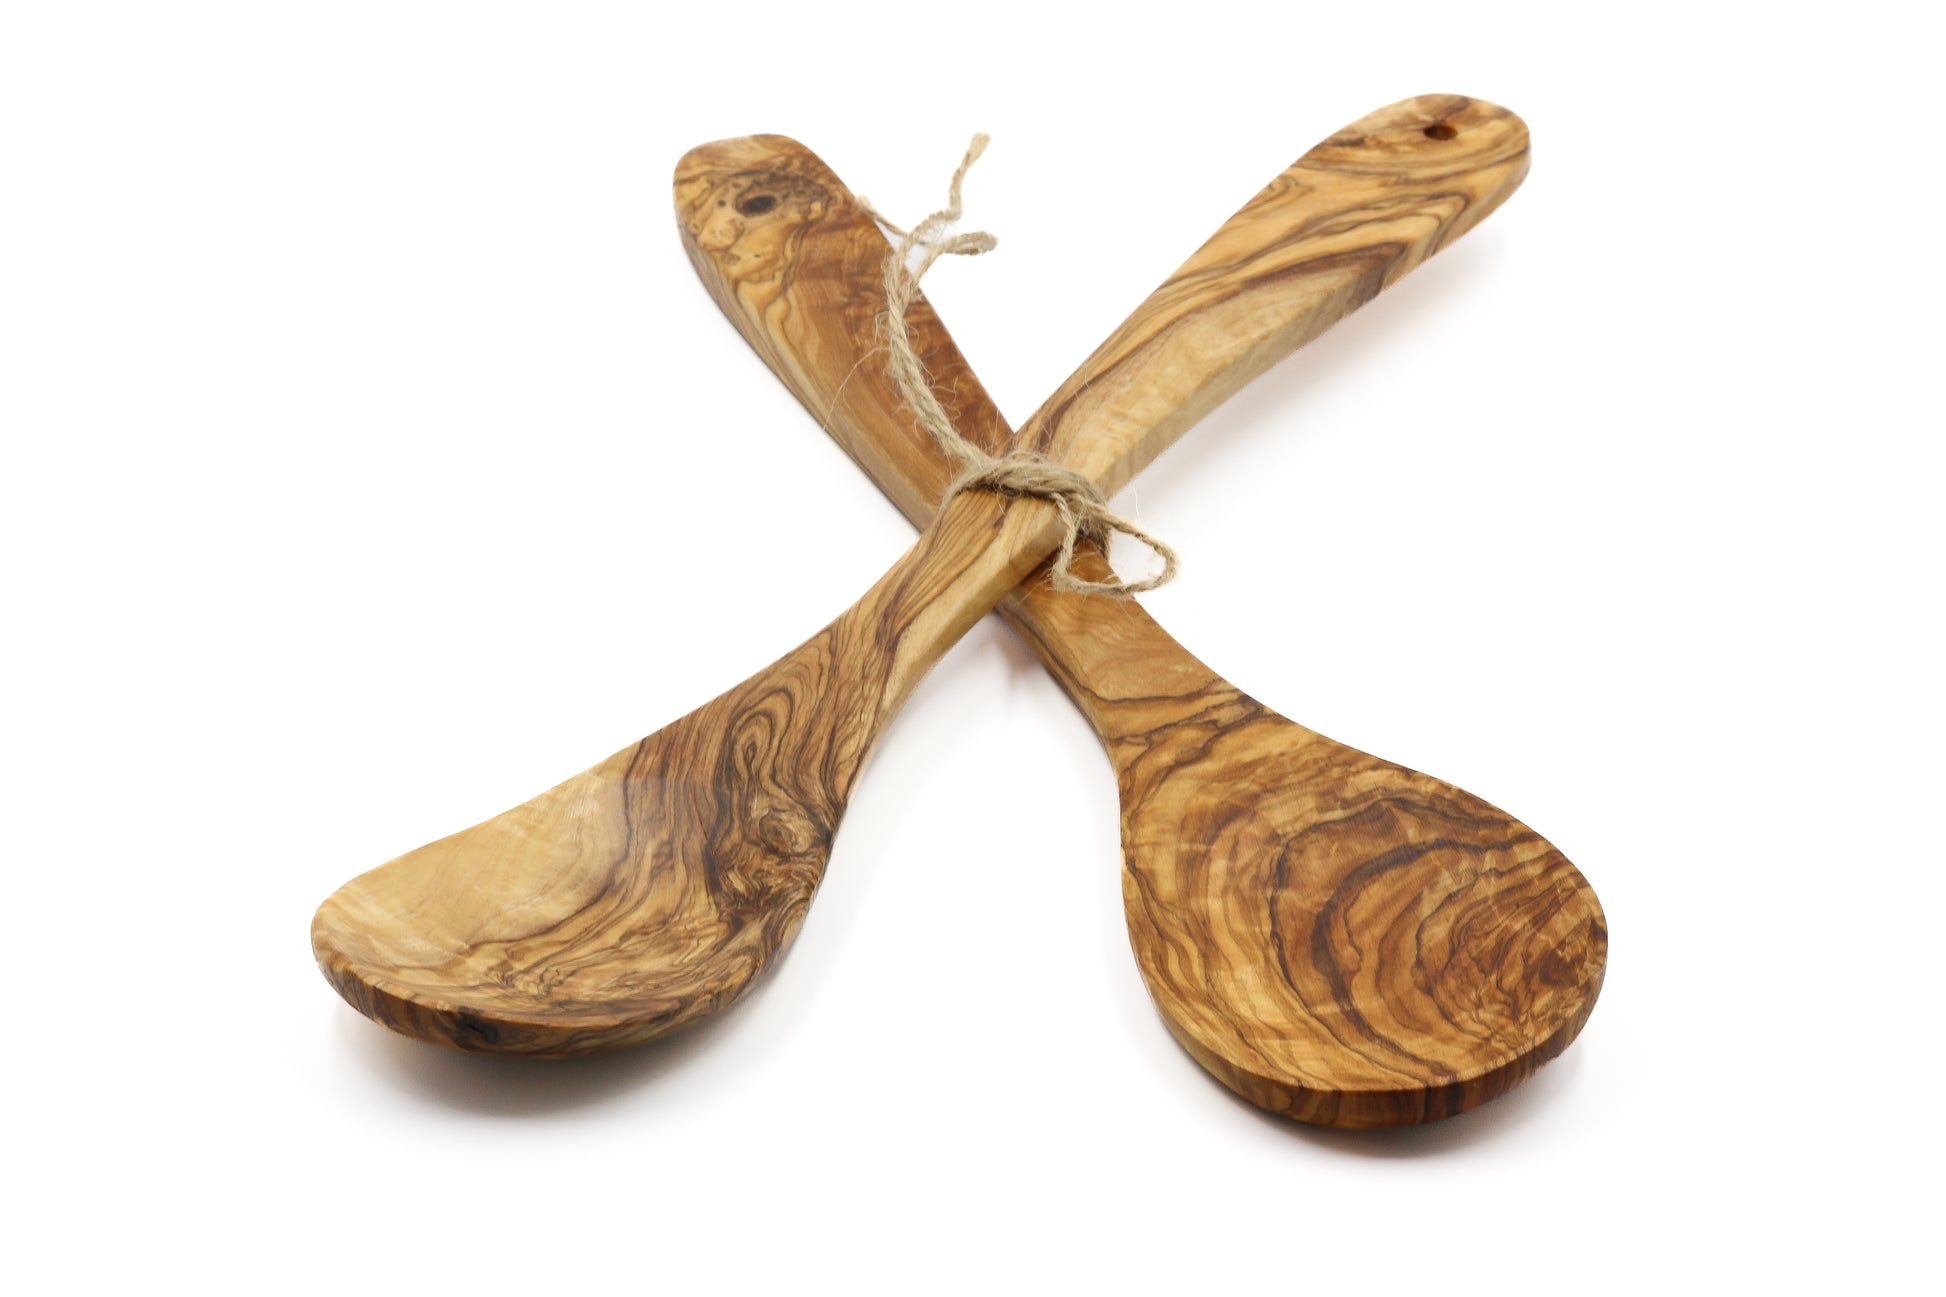 Handcrafted olive wood spoon for polenta and stirring tasks